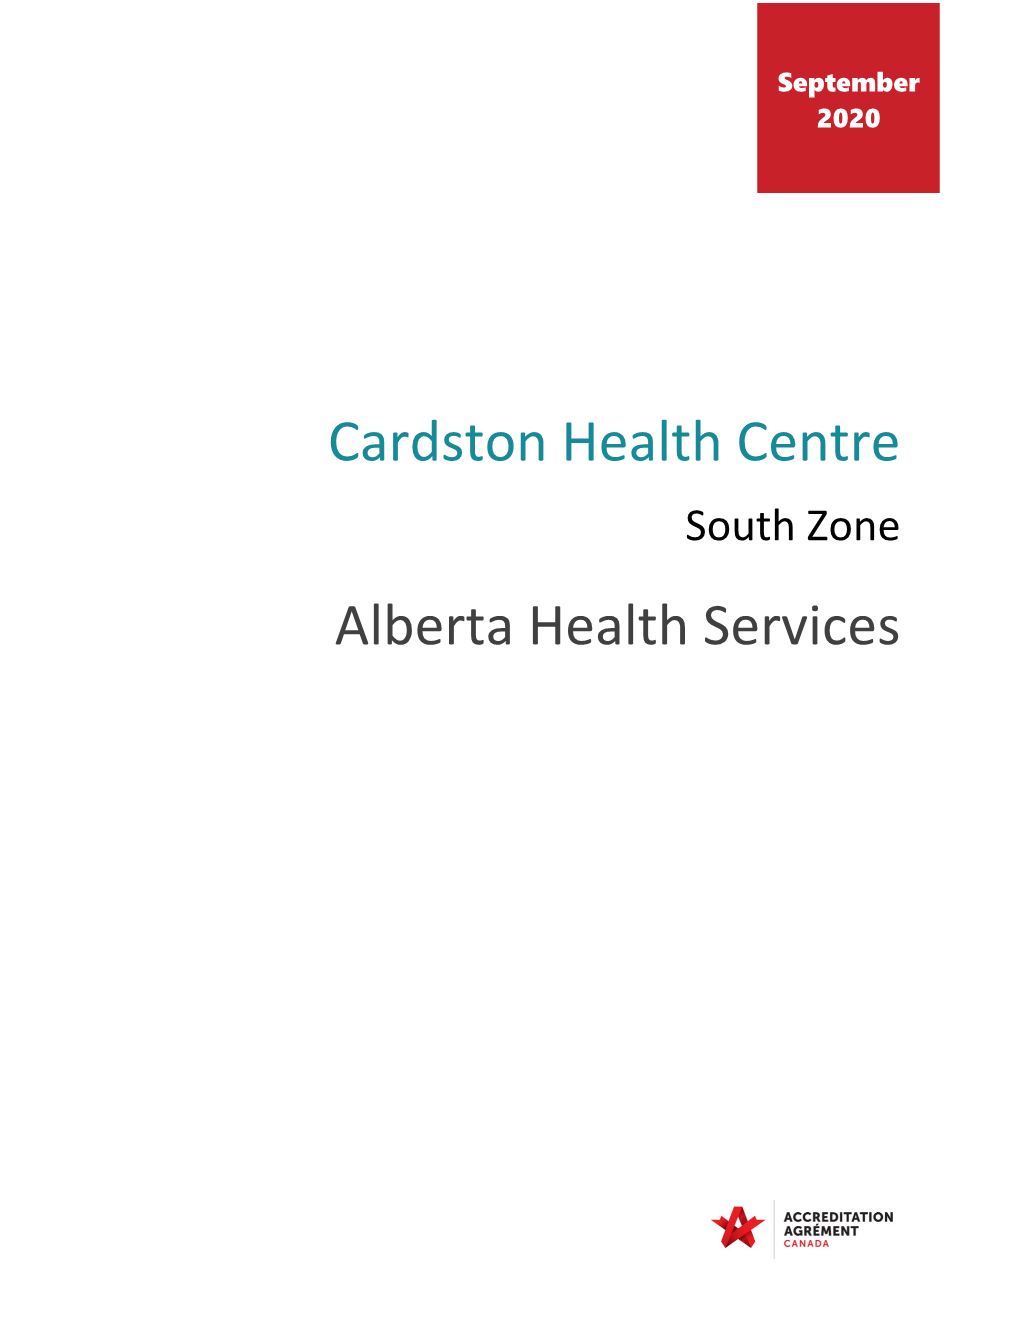 Cardston Health Centre Accreditation Report